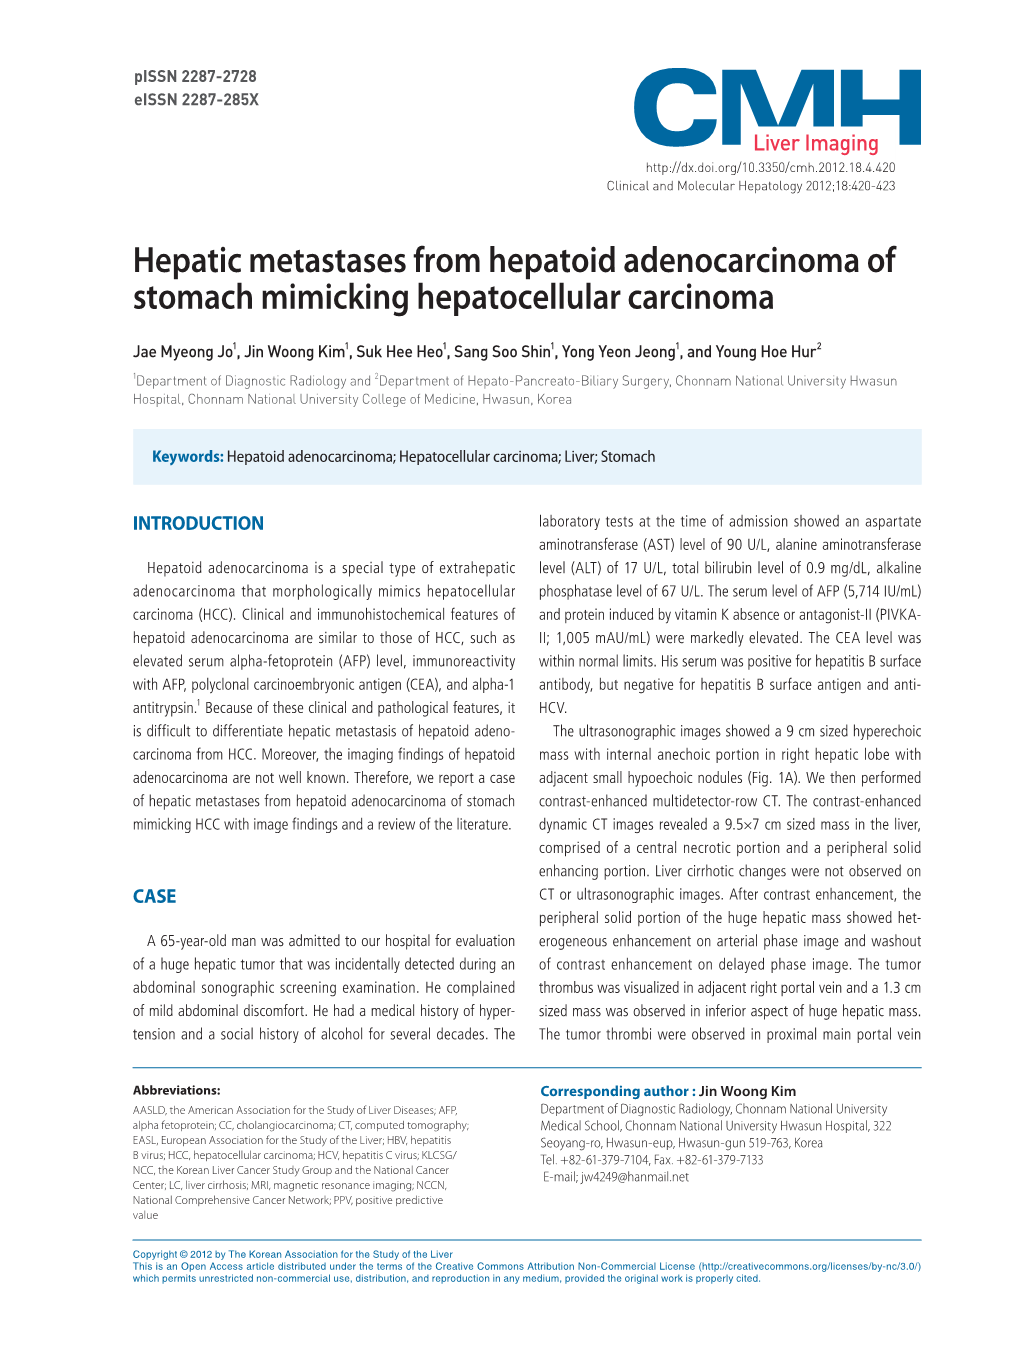 Hepatic Metastases from Hepatoid Adenocarcinoma of Stomach Mimicking Hepatocellular Carcinoma